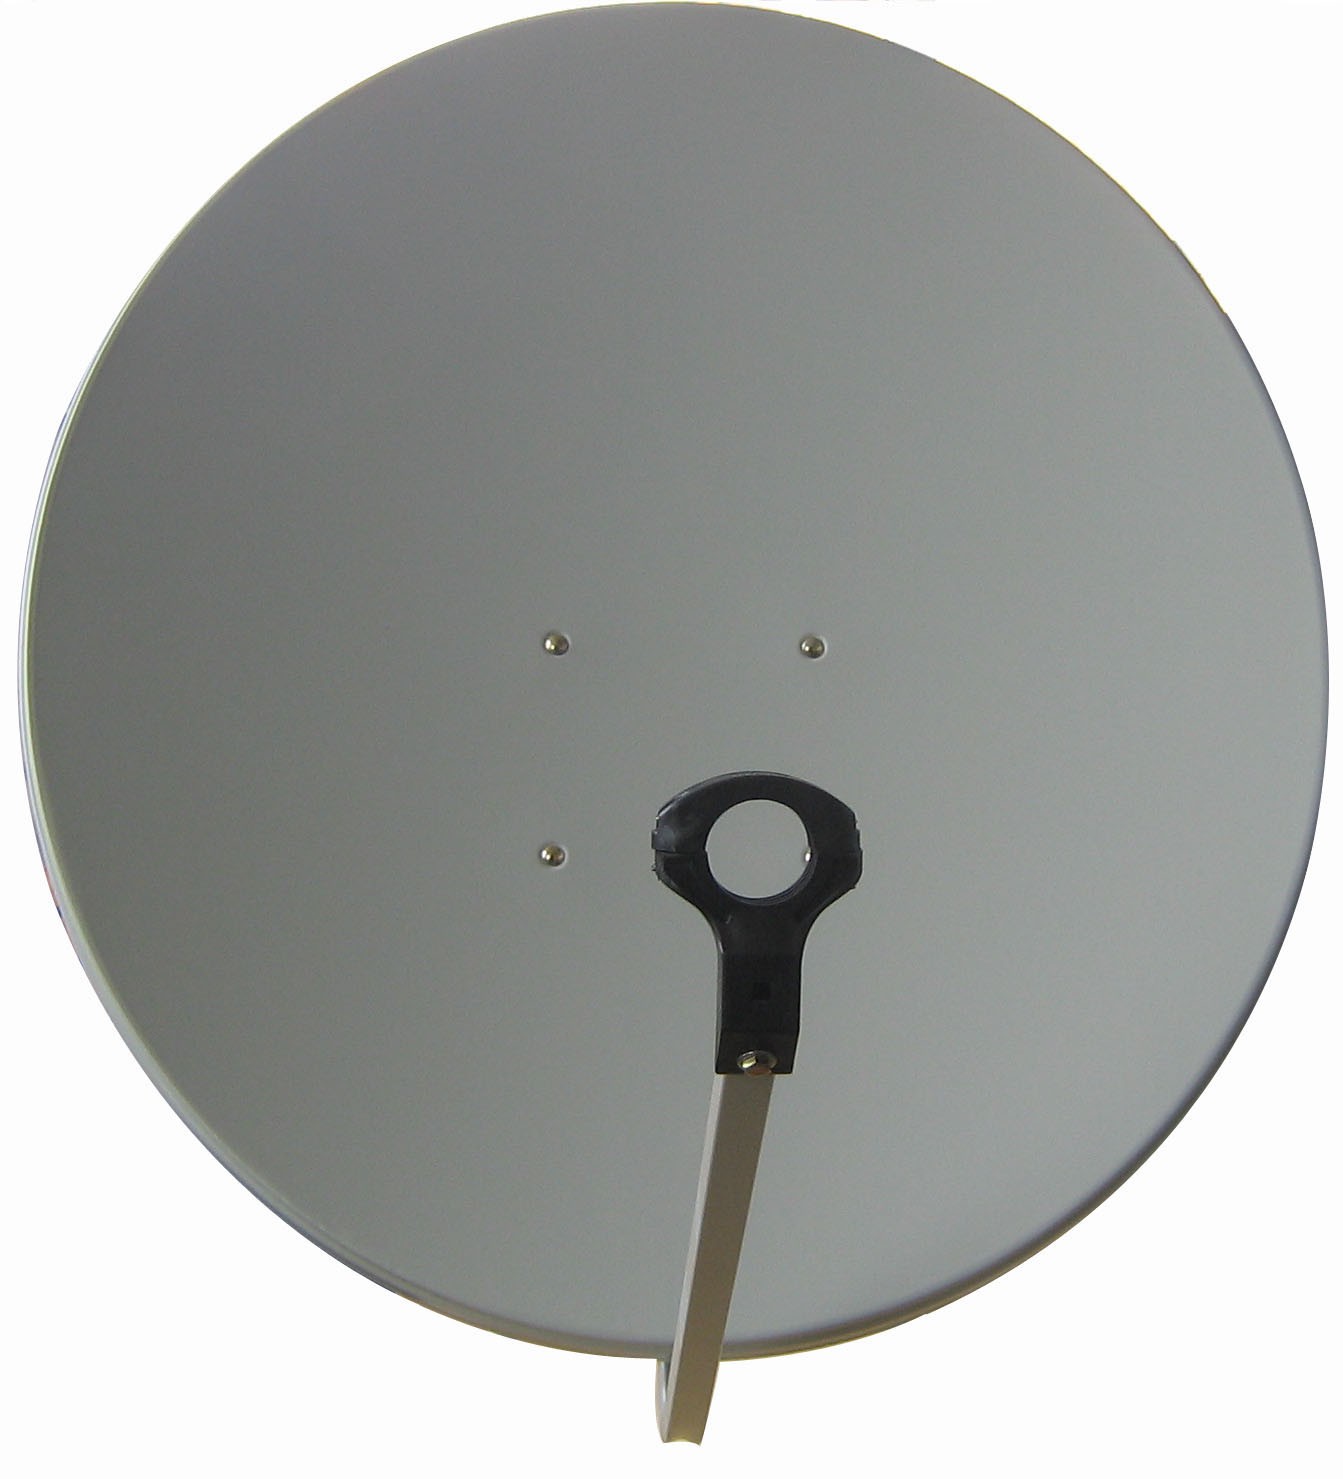 75cm Ku band satellite dish antenna